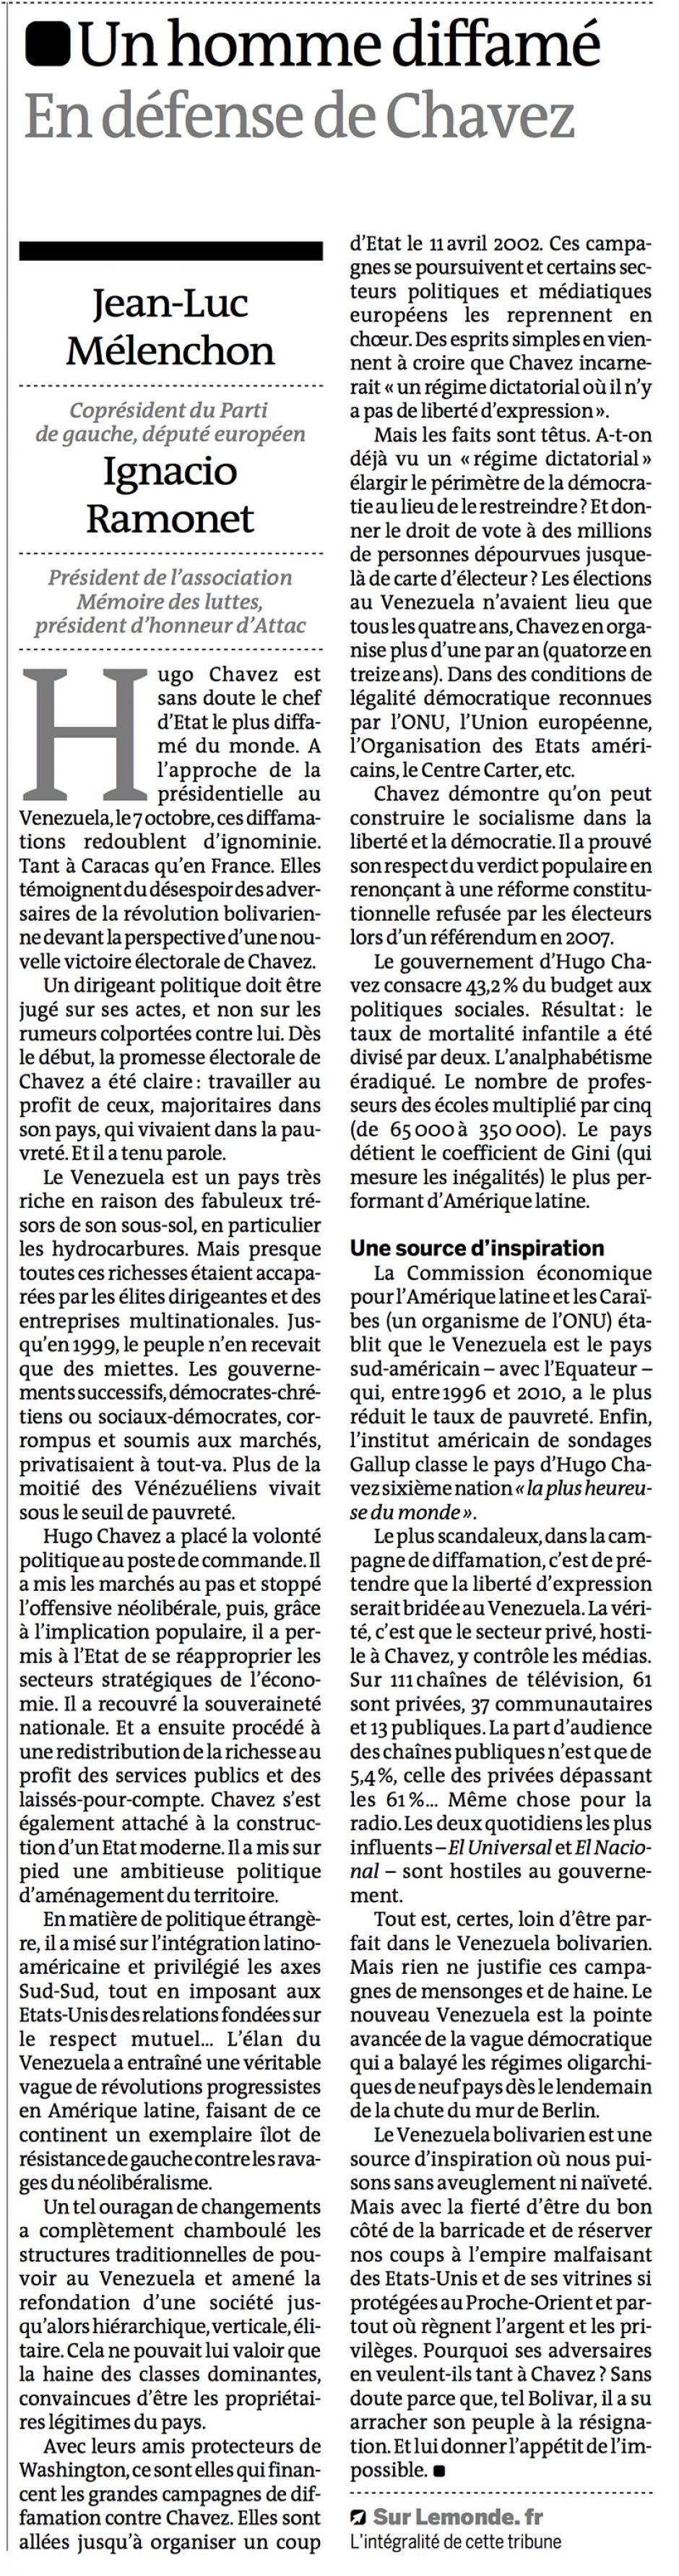 20121005-Le Monde-Jean-Luc Mélenchon & Ignacio Ramonet : Hugo Chávez, un homme diffamé